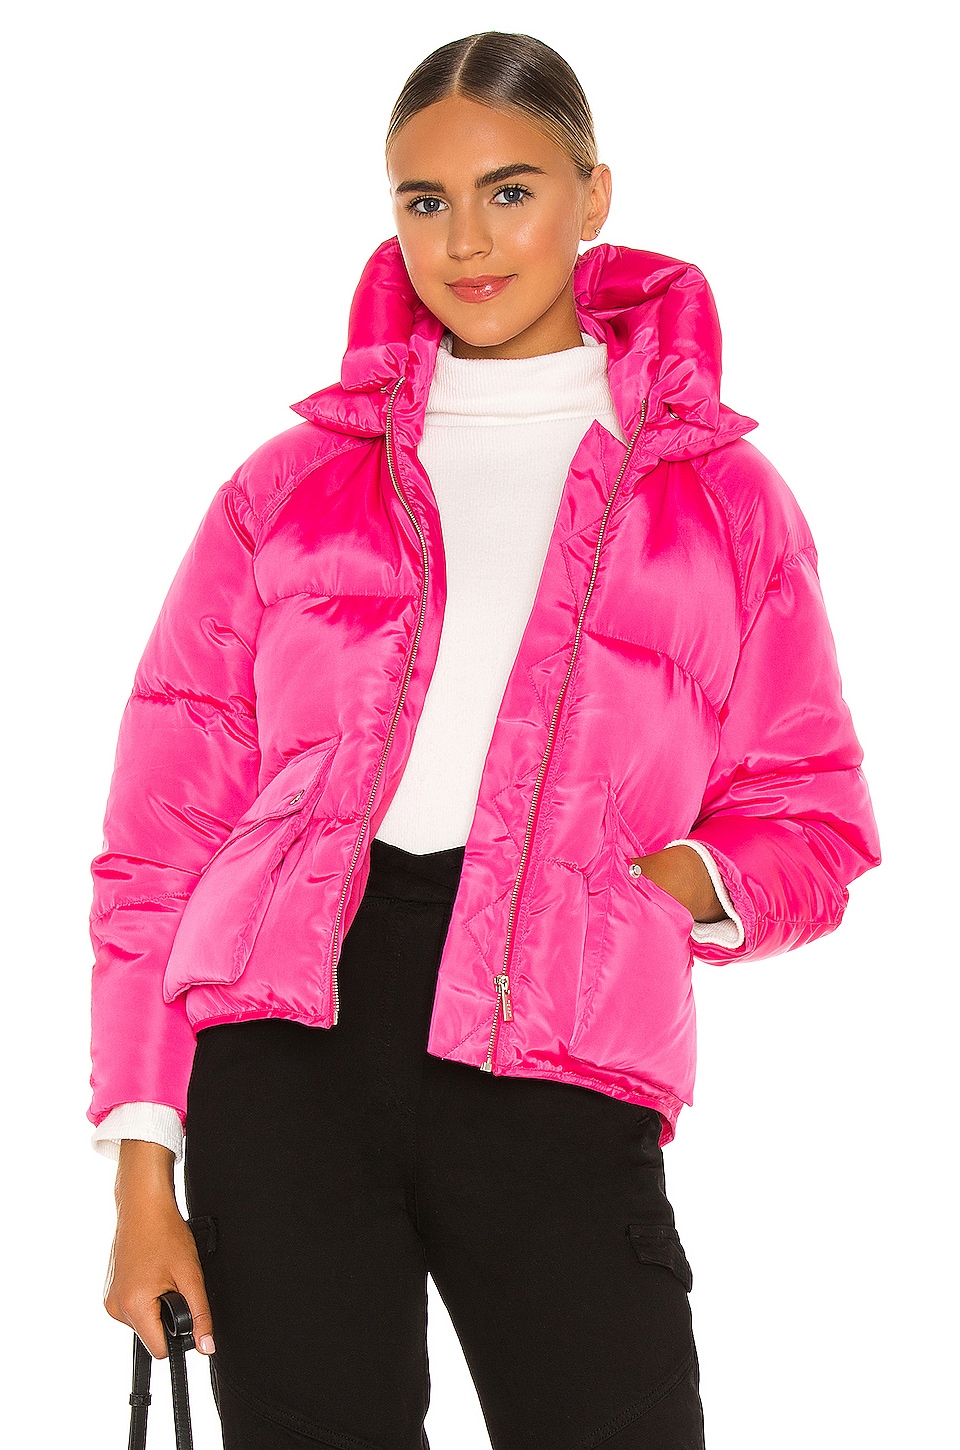 neon pink jacket